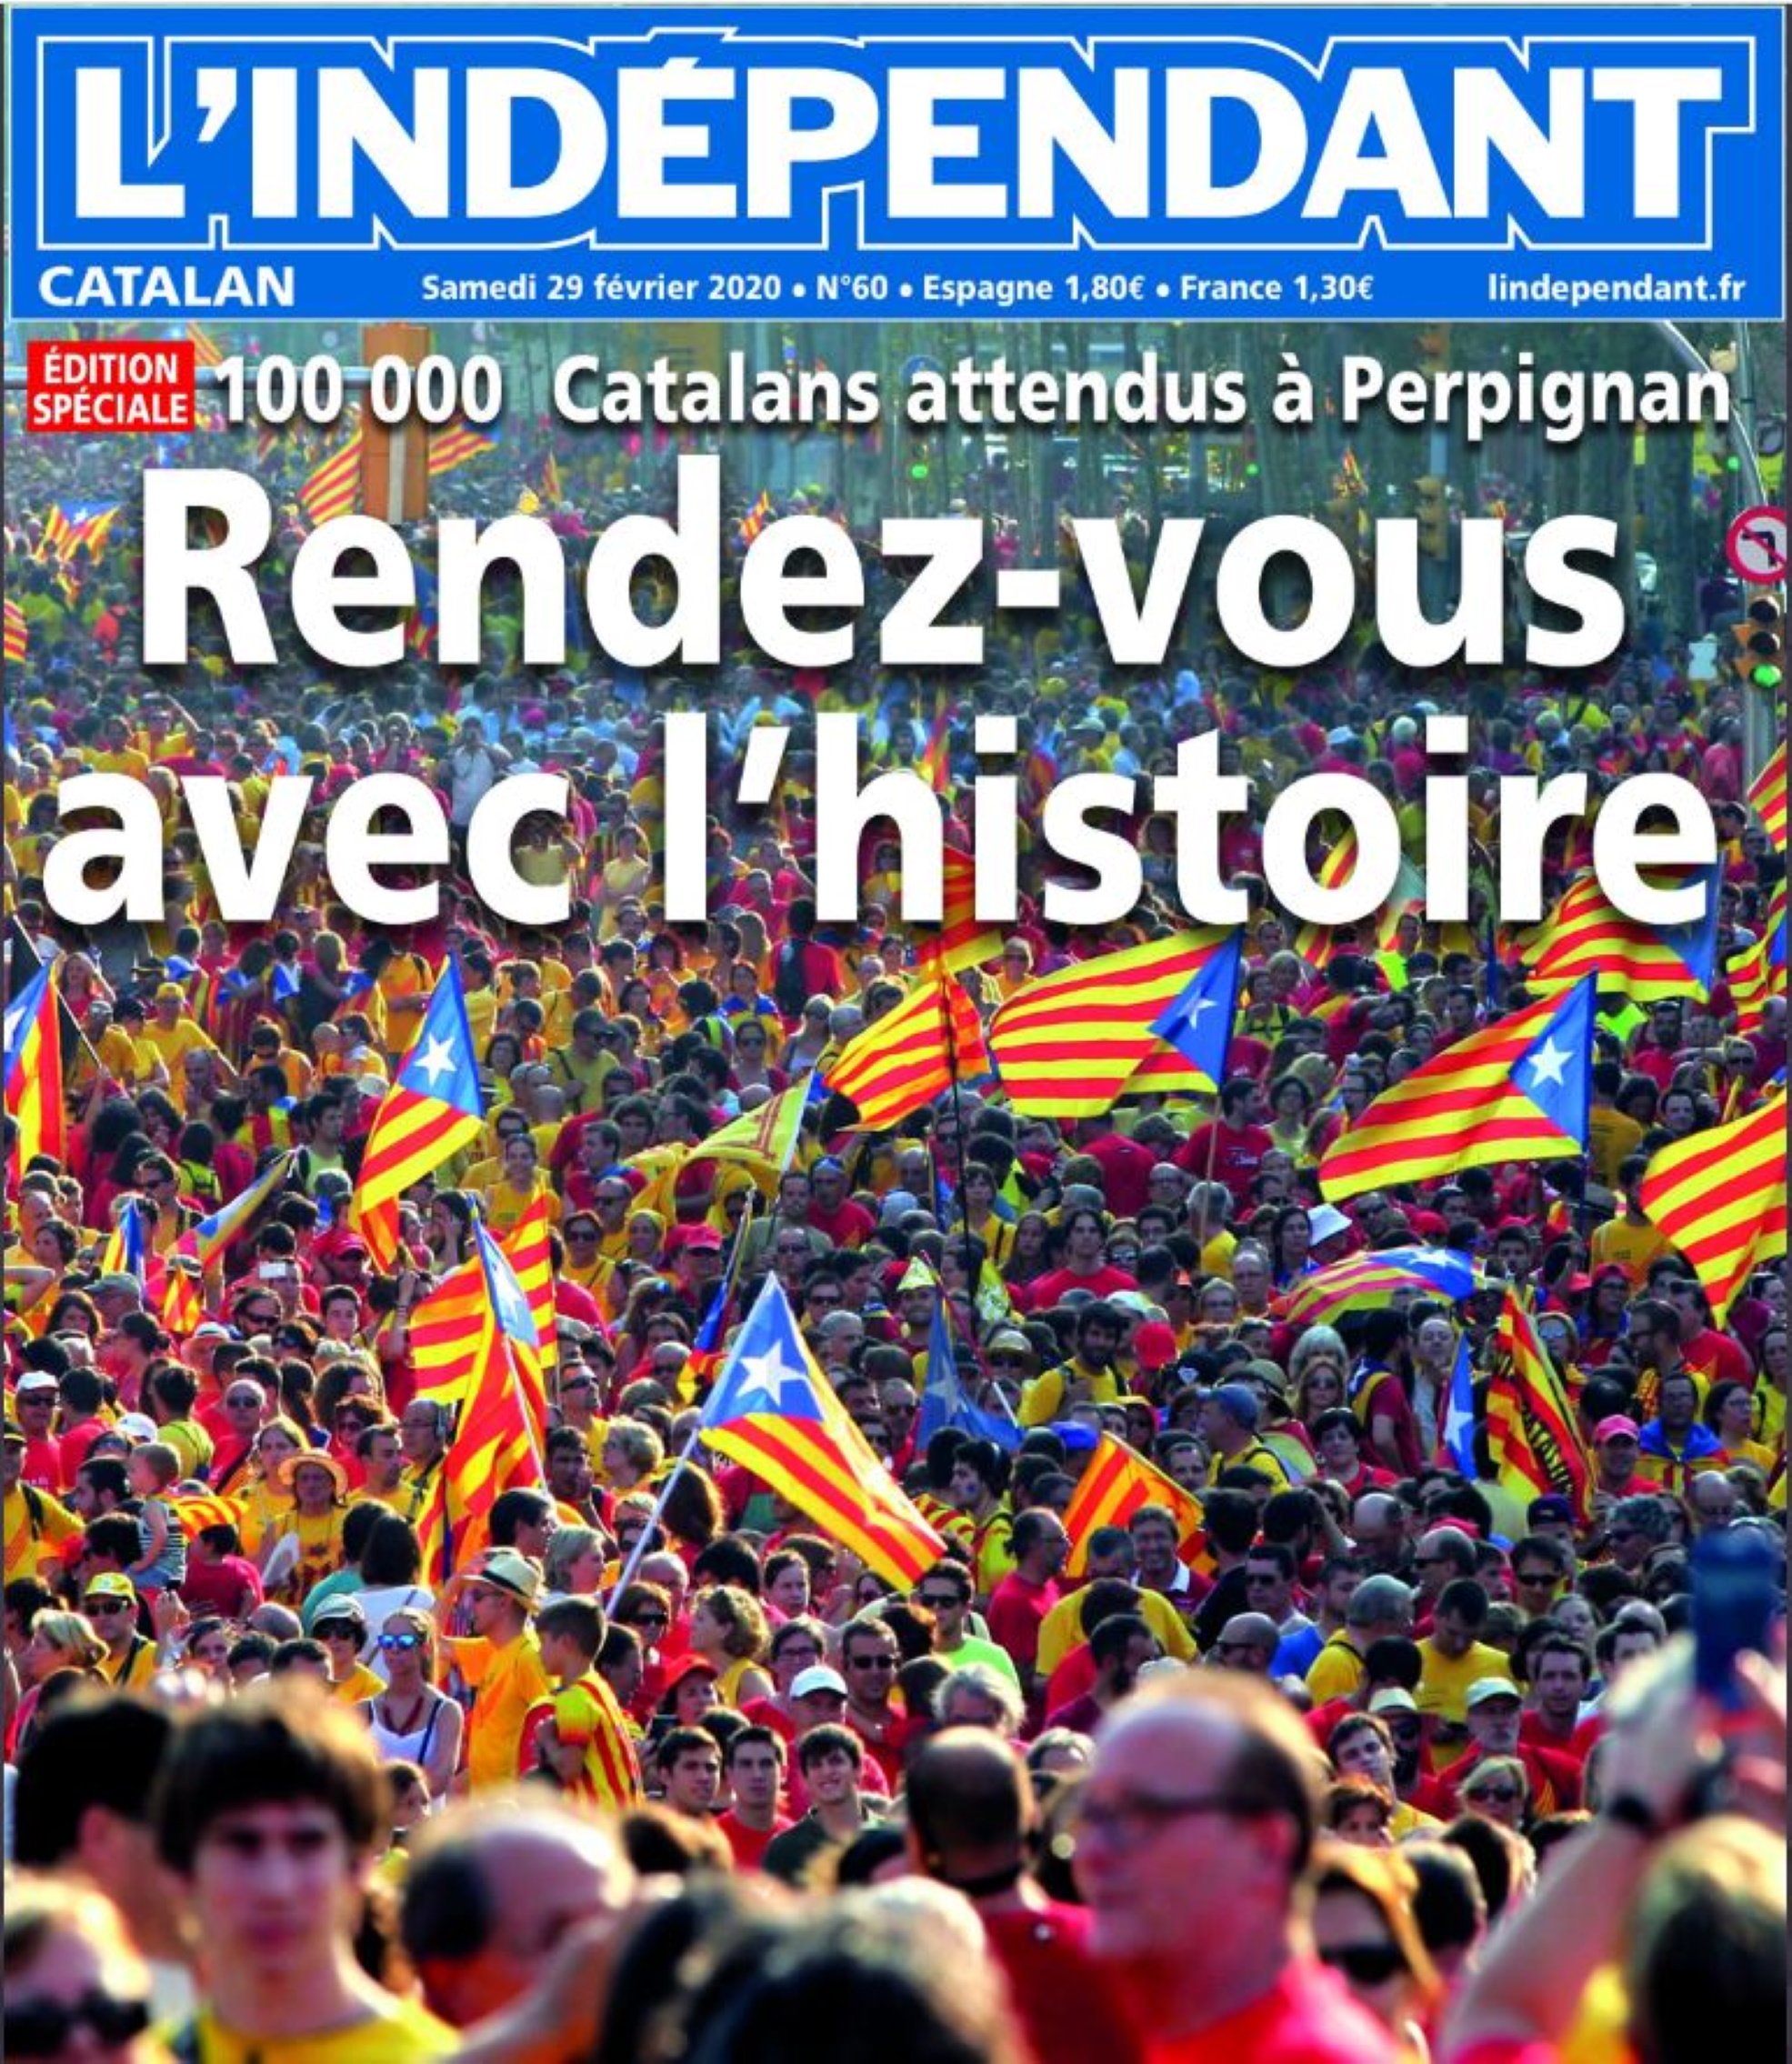 La impresionante portada de 'L'indépendant': "Encuentro con la historia"